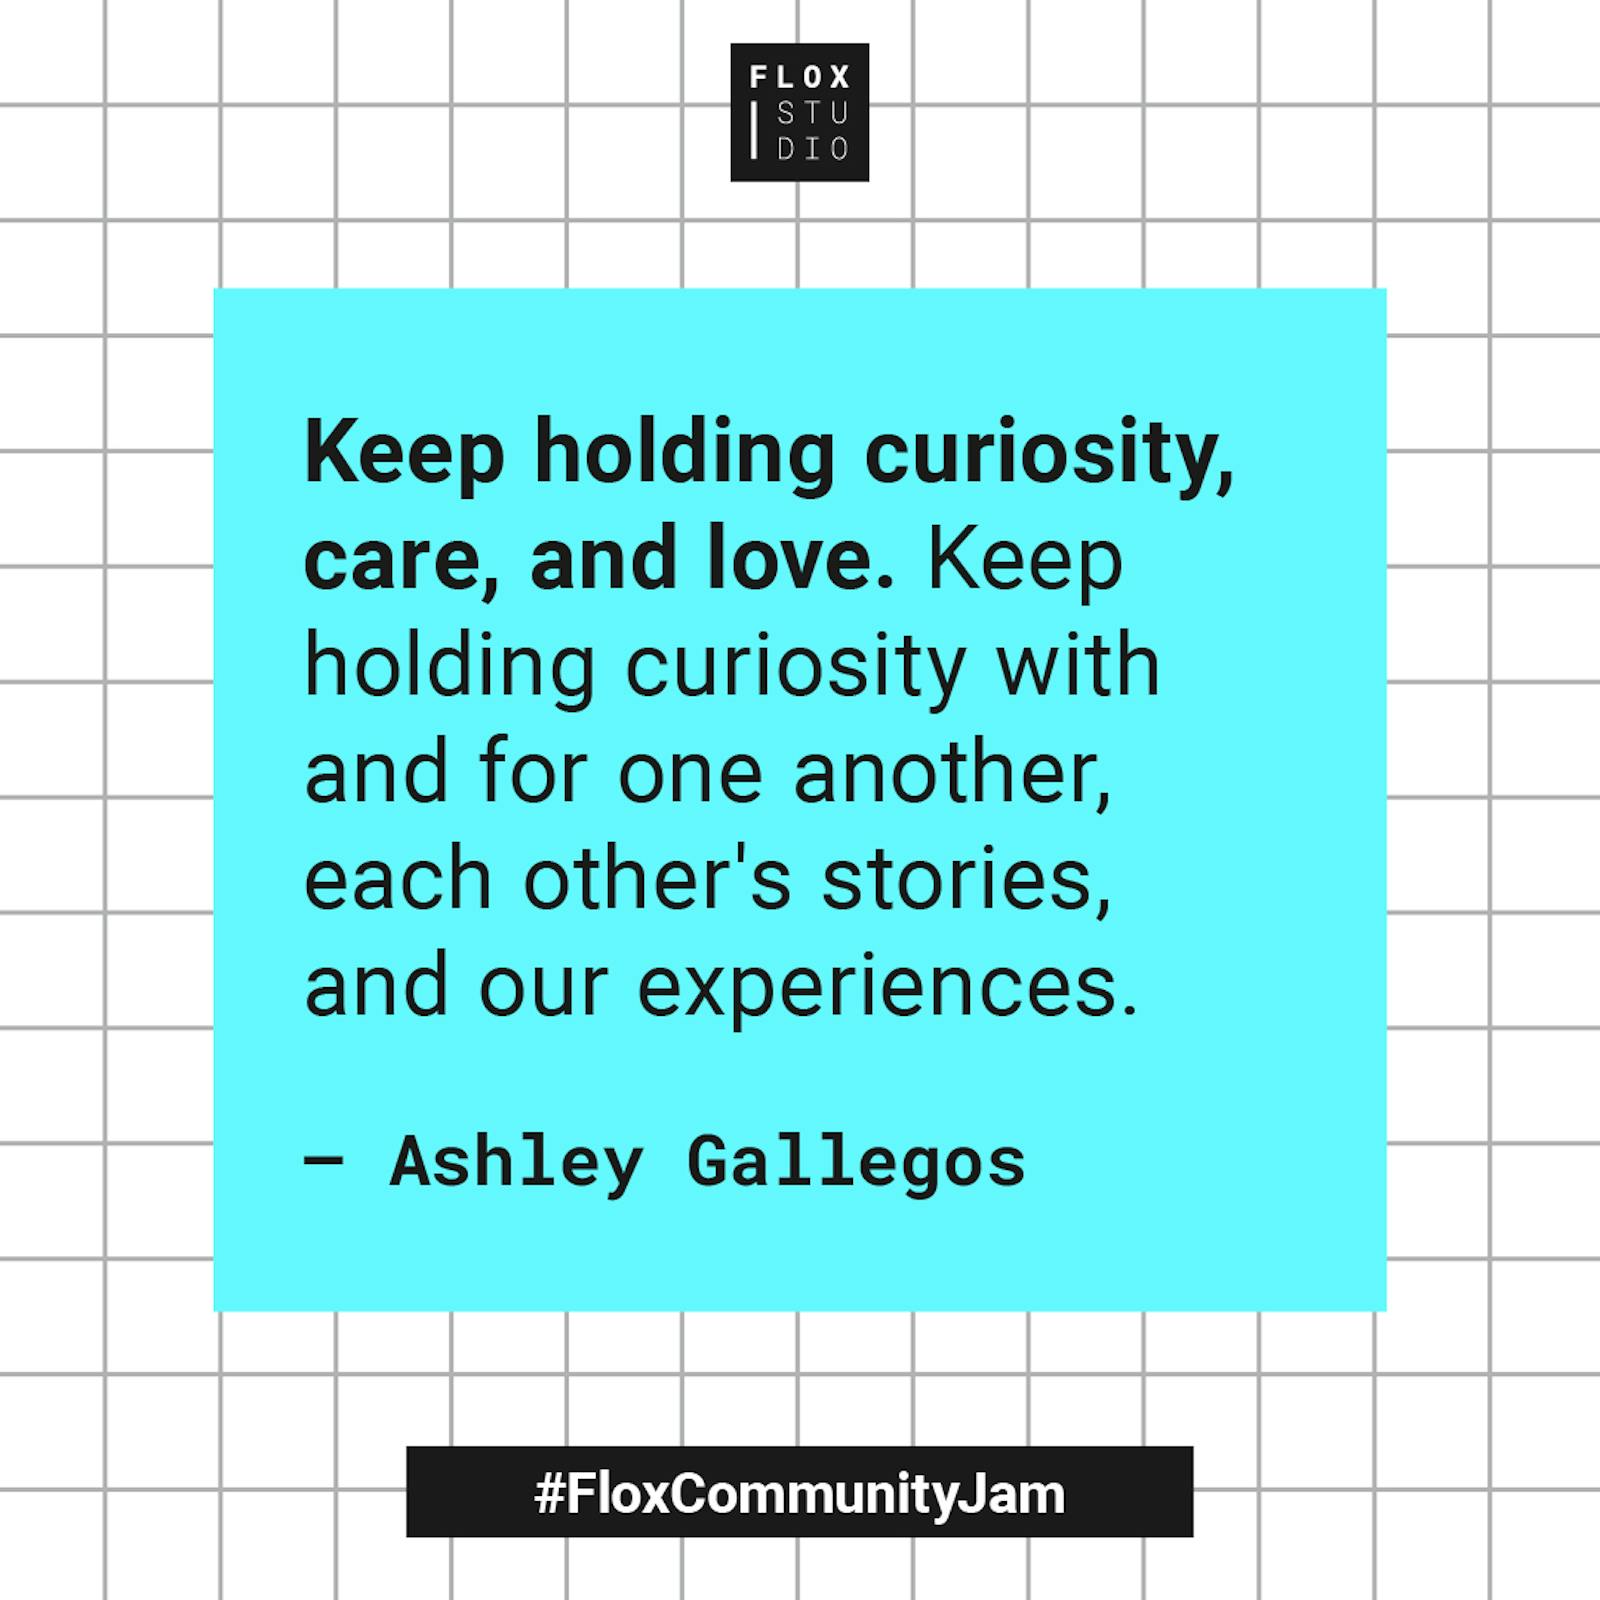 Designing For Belonging with Ashley Gallegos: A FLOX Studio Community Jam